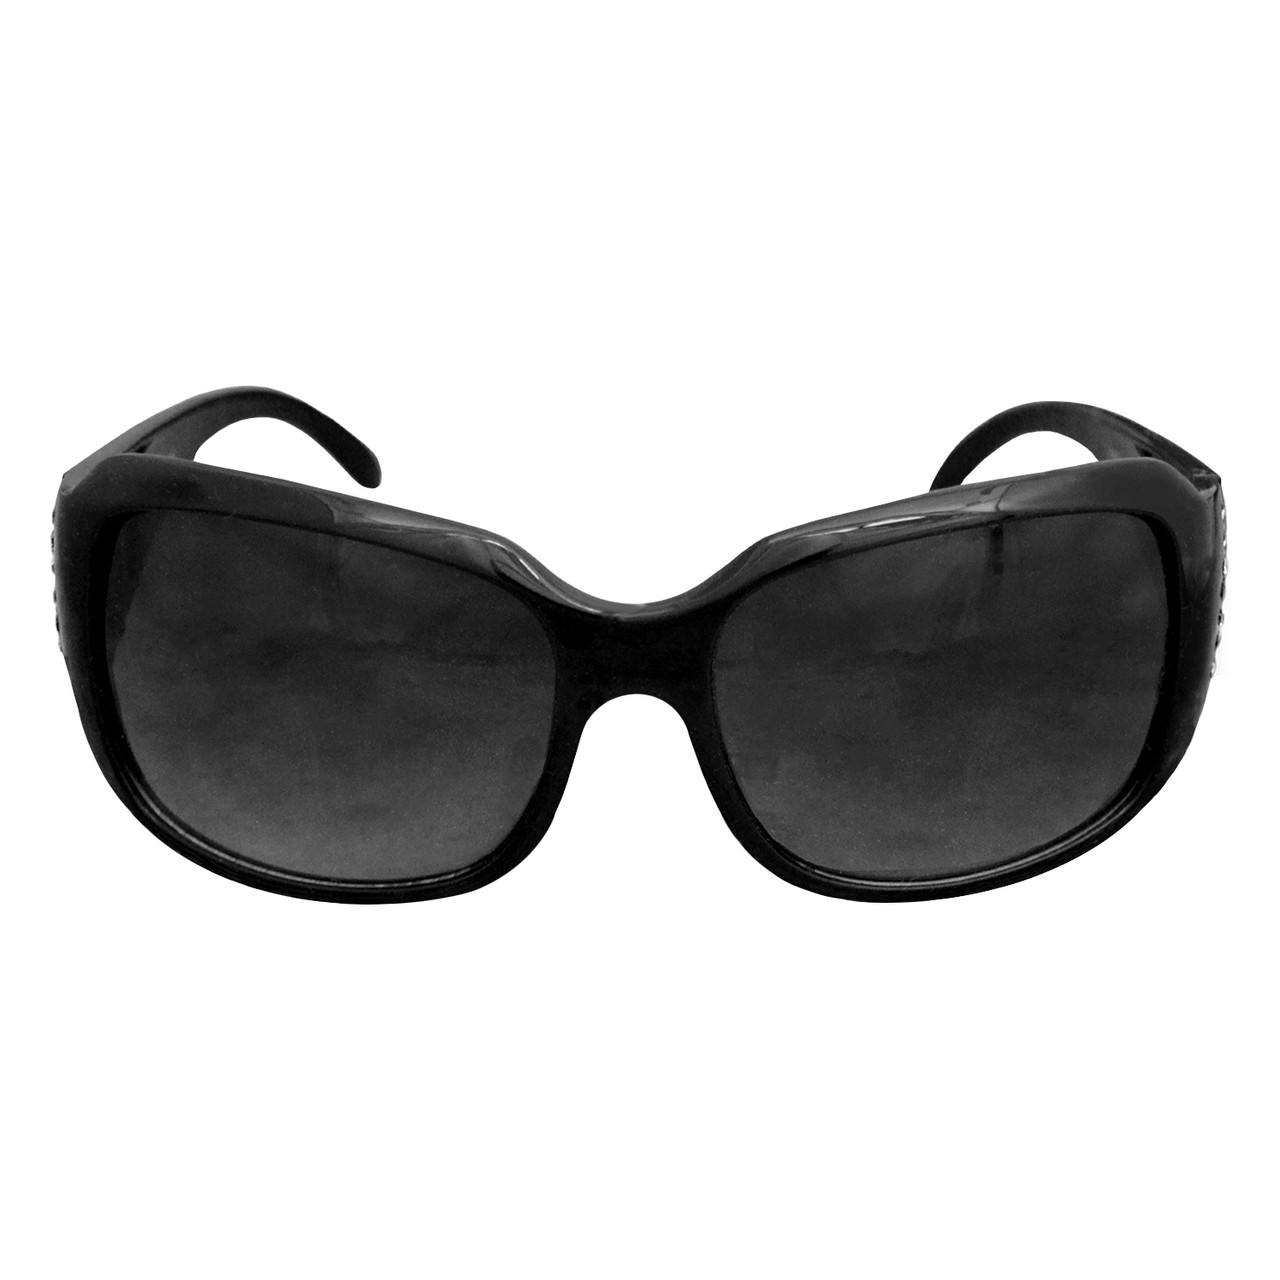 North Dakota State Bison Brunch Fashion College Sunglasses (Black)